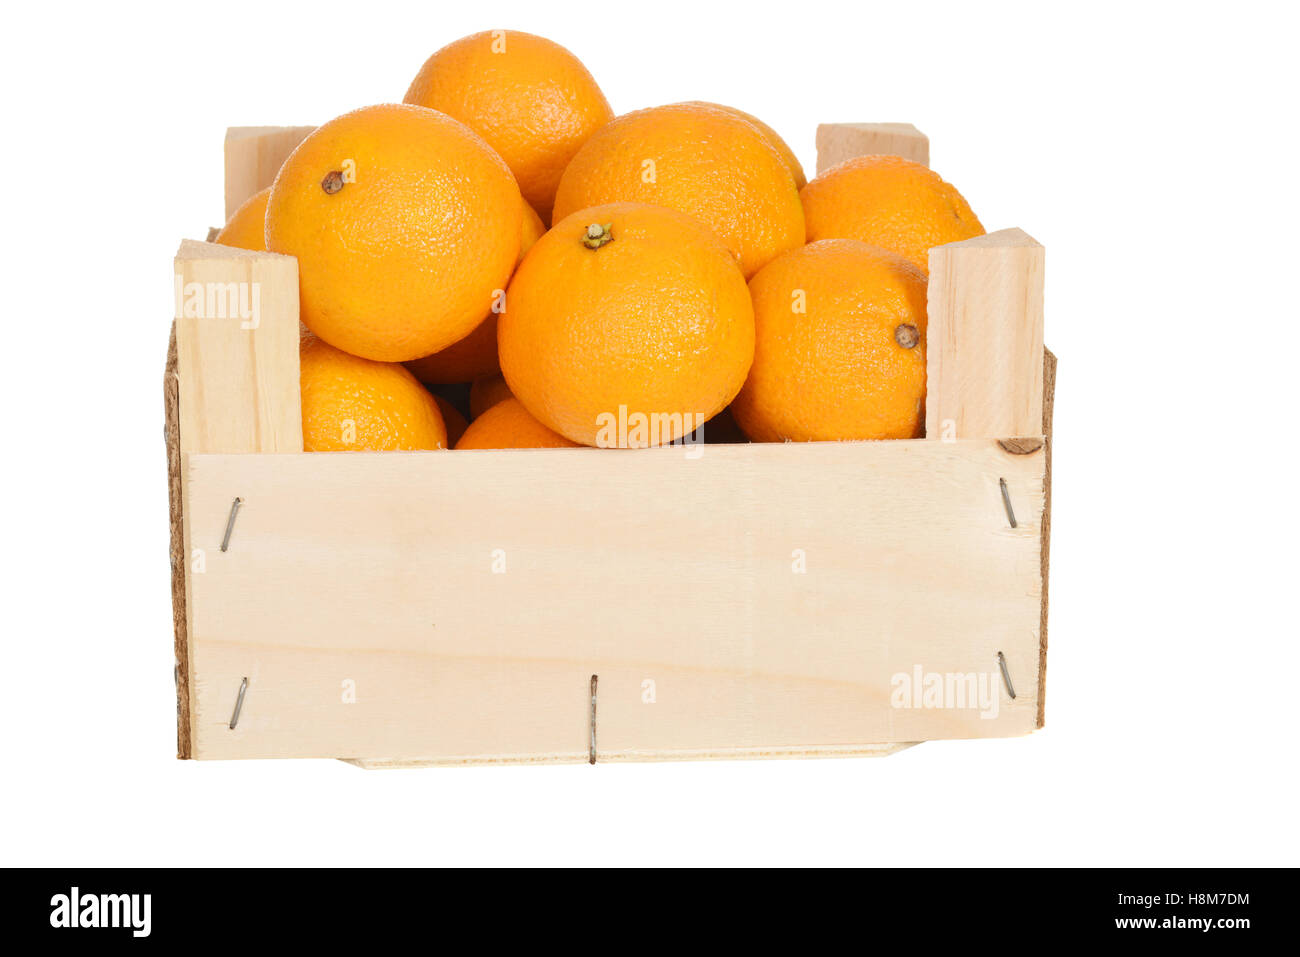 https://c8.alamy.com/comp/H8M7DM/wood-box-of-mandarin-oranges-H8M7DM.jpg